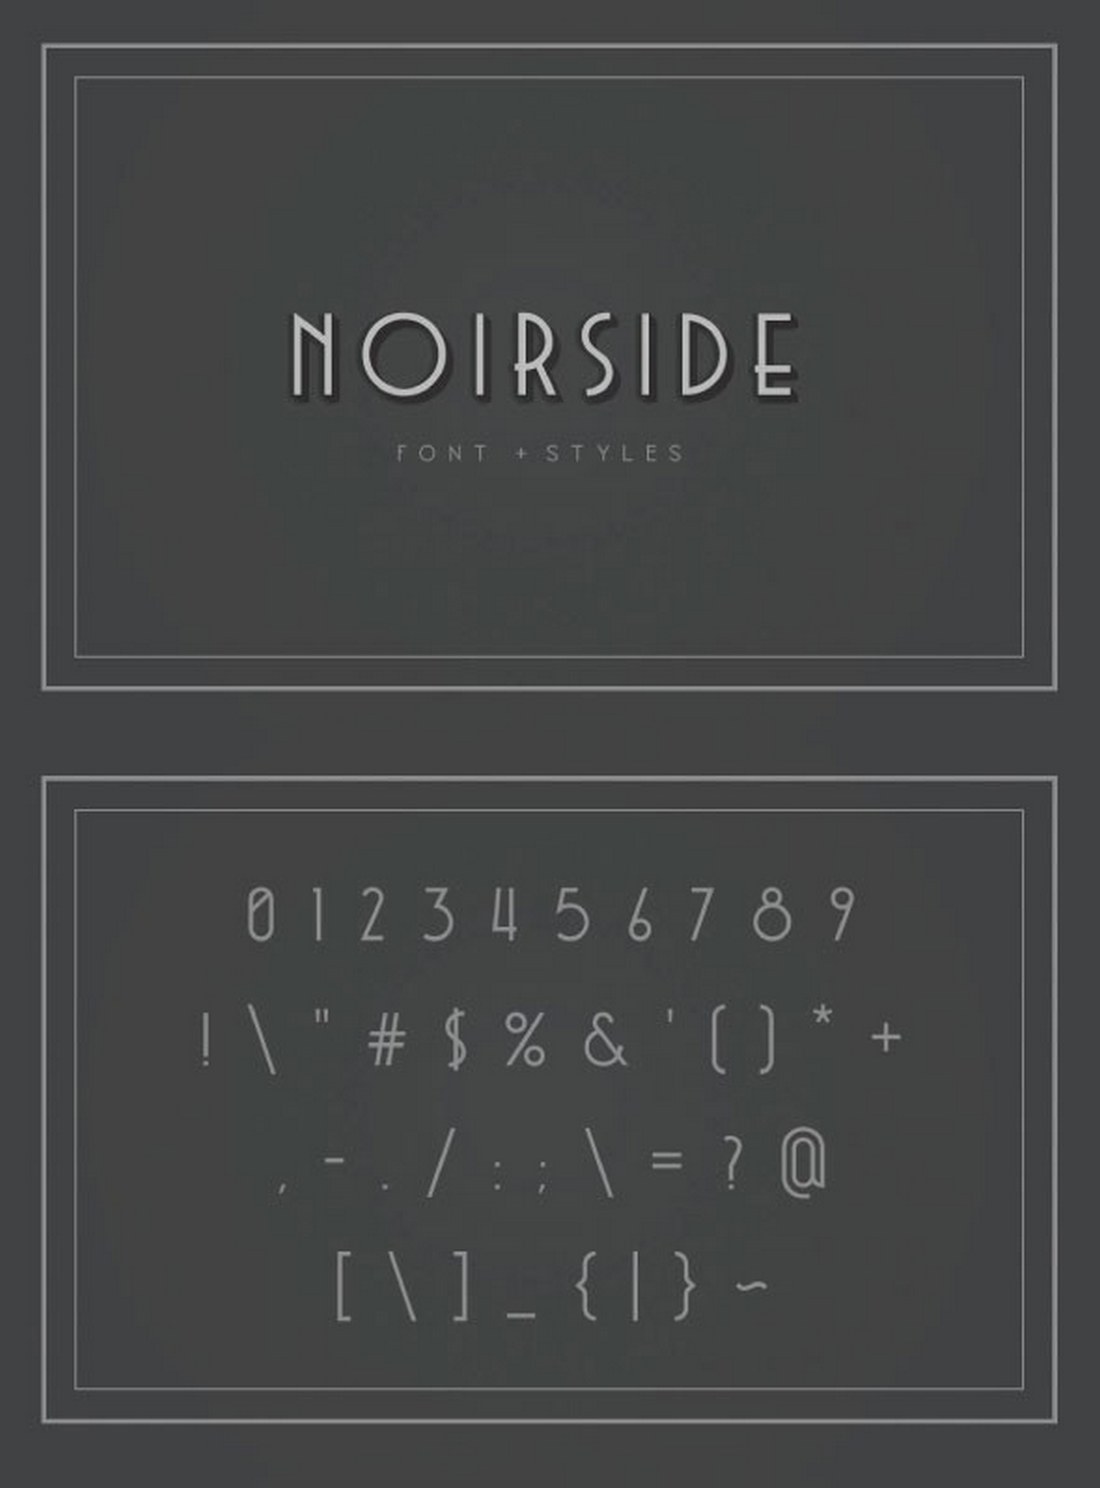 Noirside Typeface